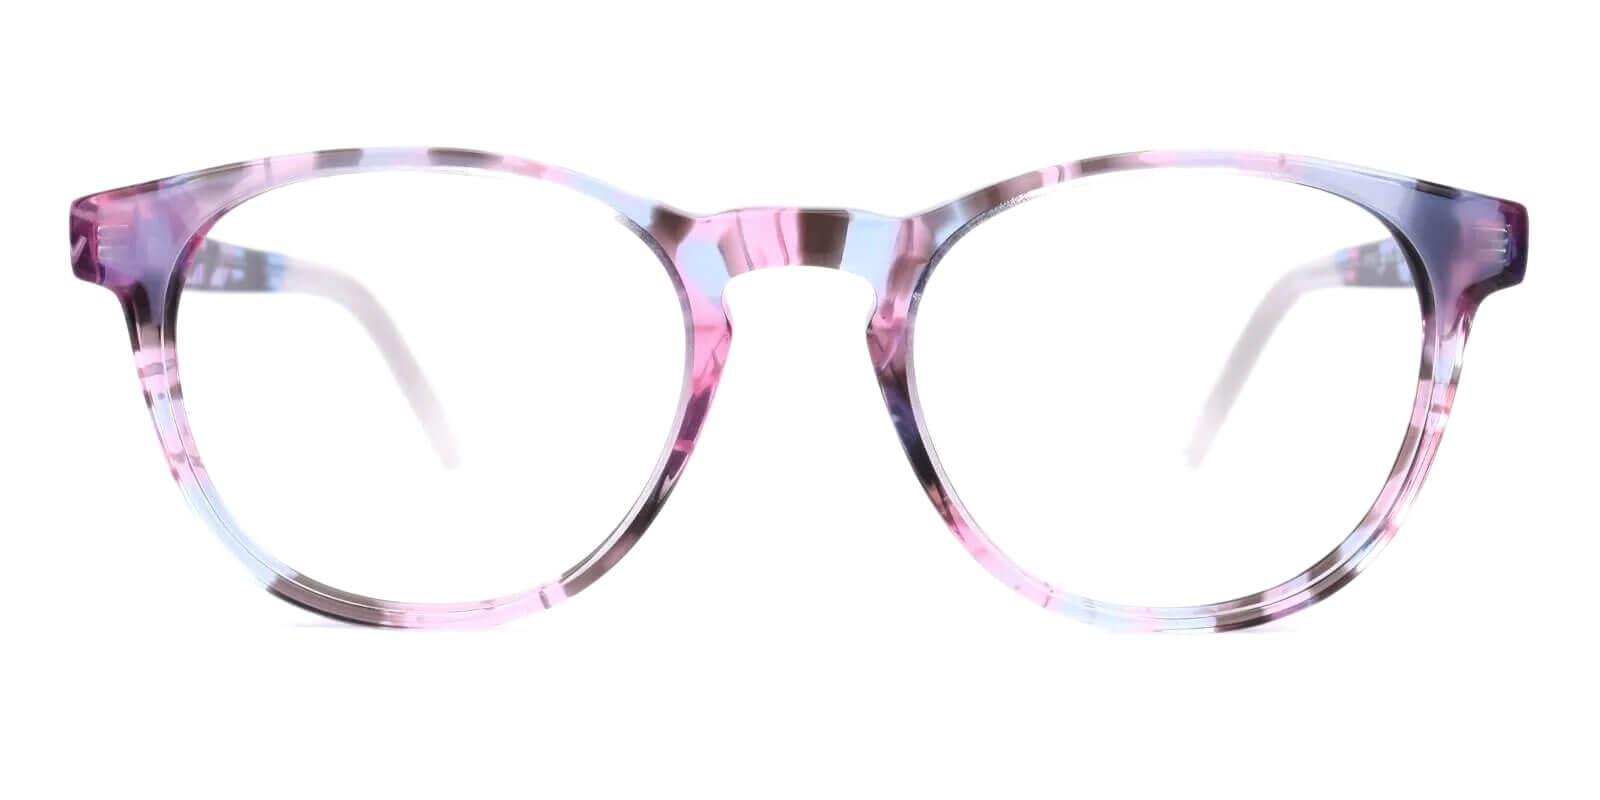 Otava Purple Acetate Eyeglasses , UniversalBridgeFit Frames from ABBE Glasses